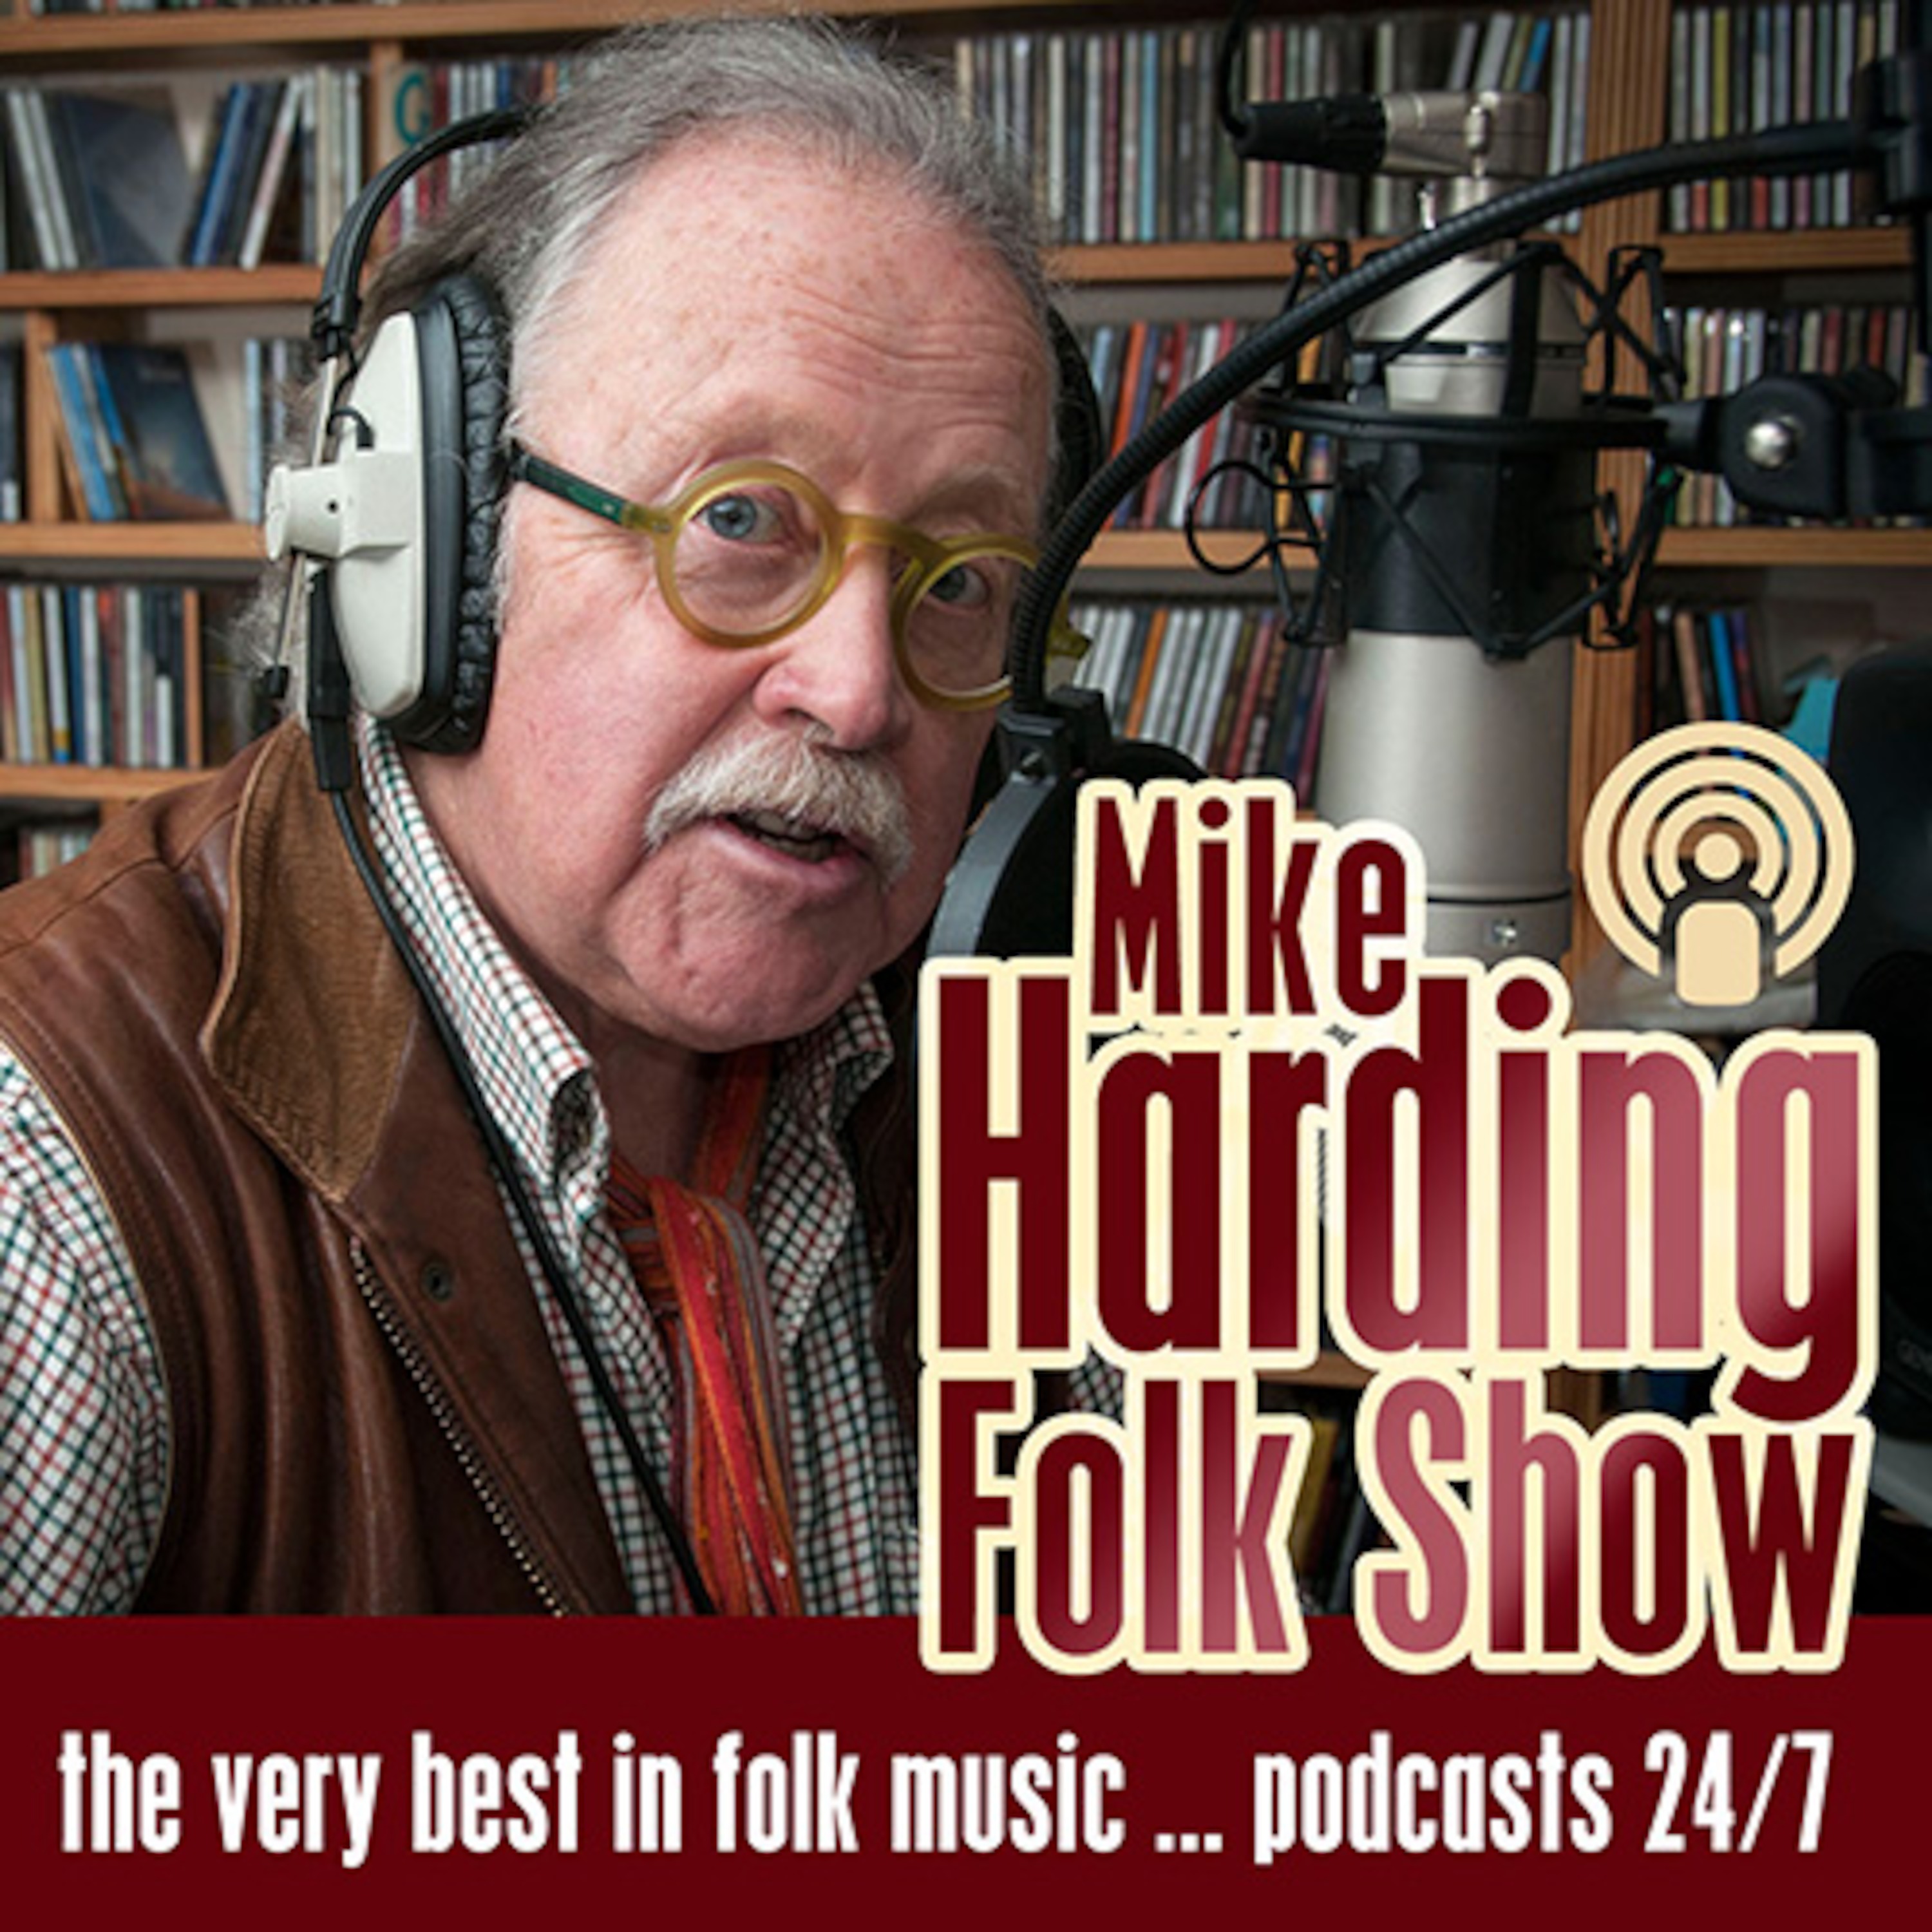 Mike Harding Folk Show 75